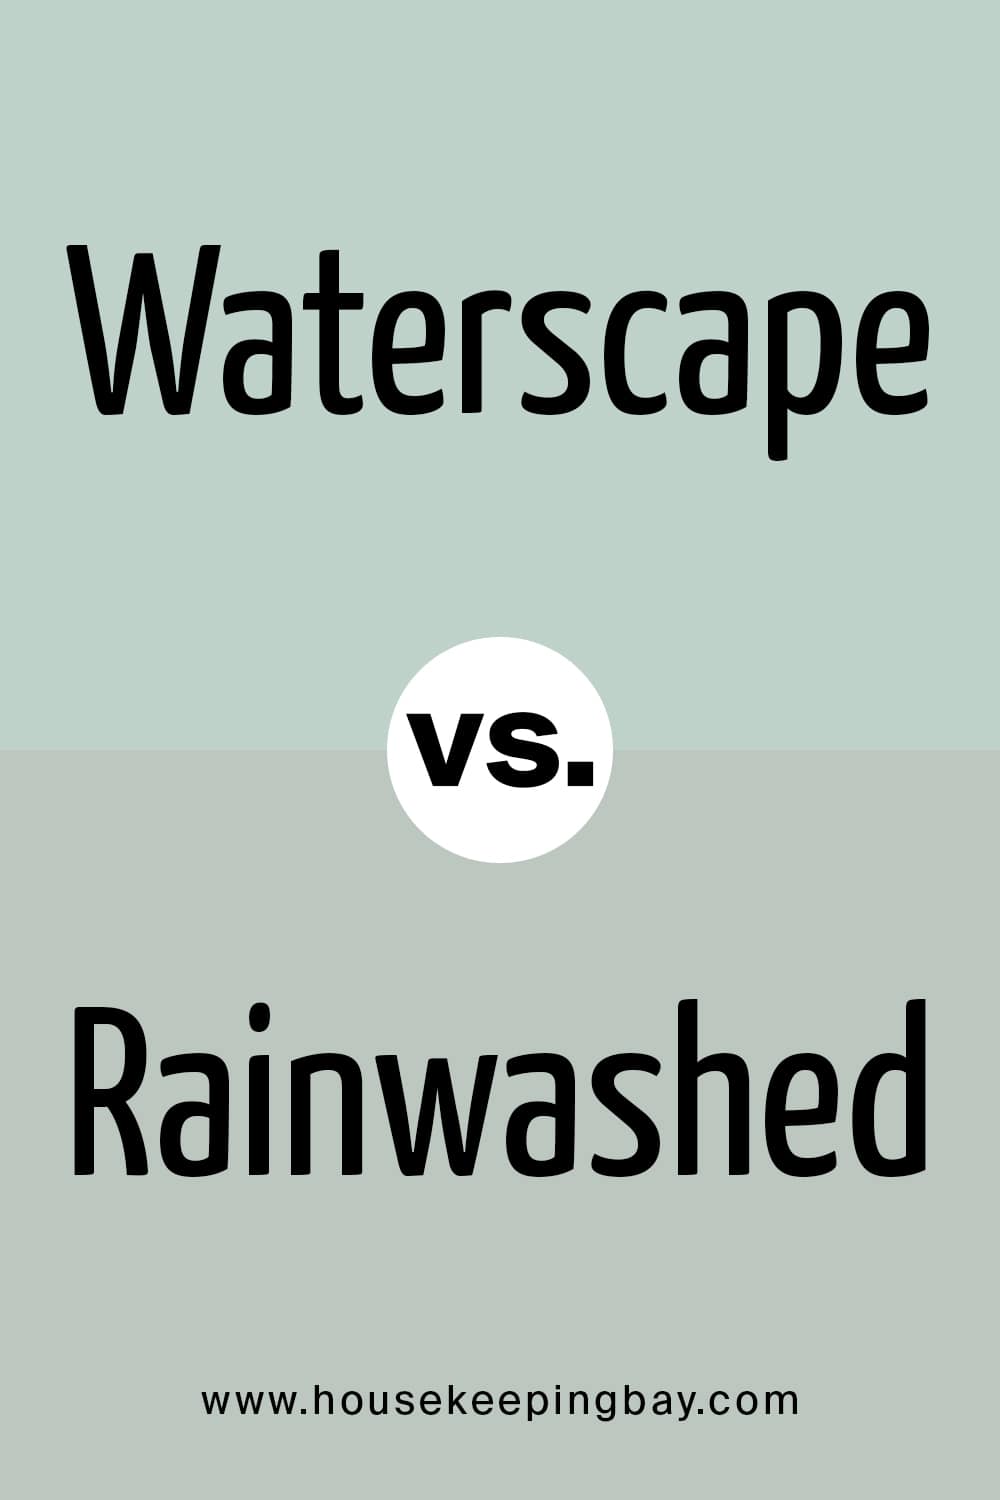 Waterscape VS Rainwashed